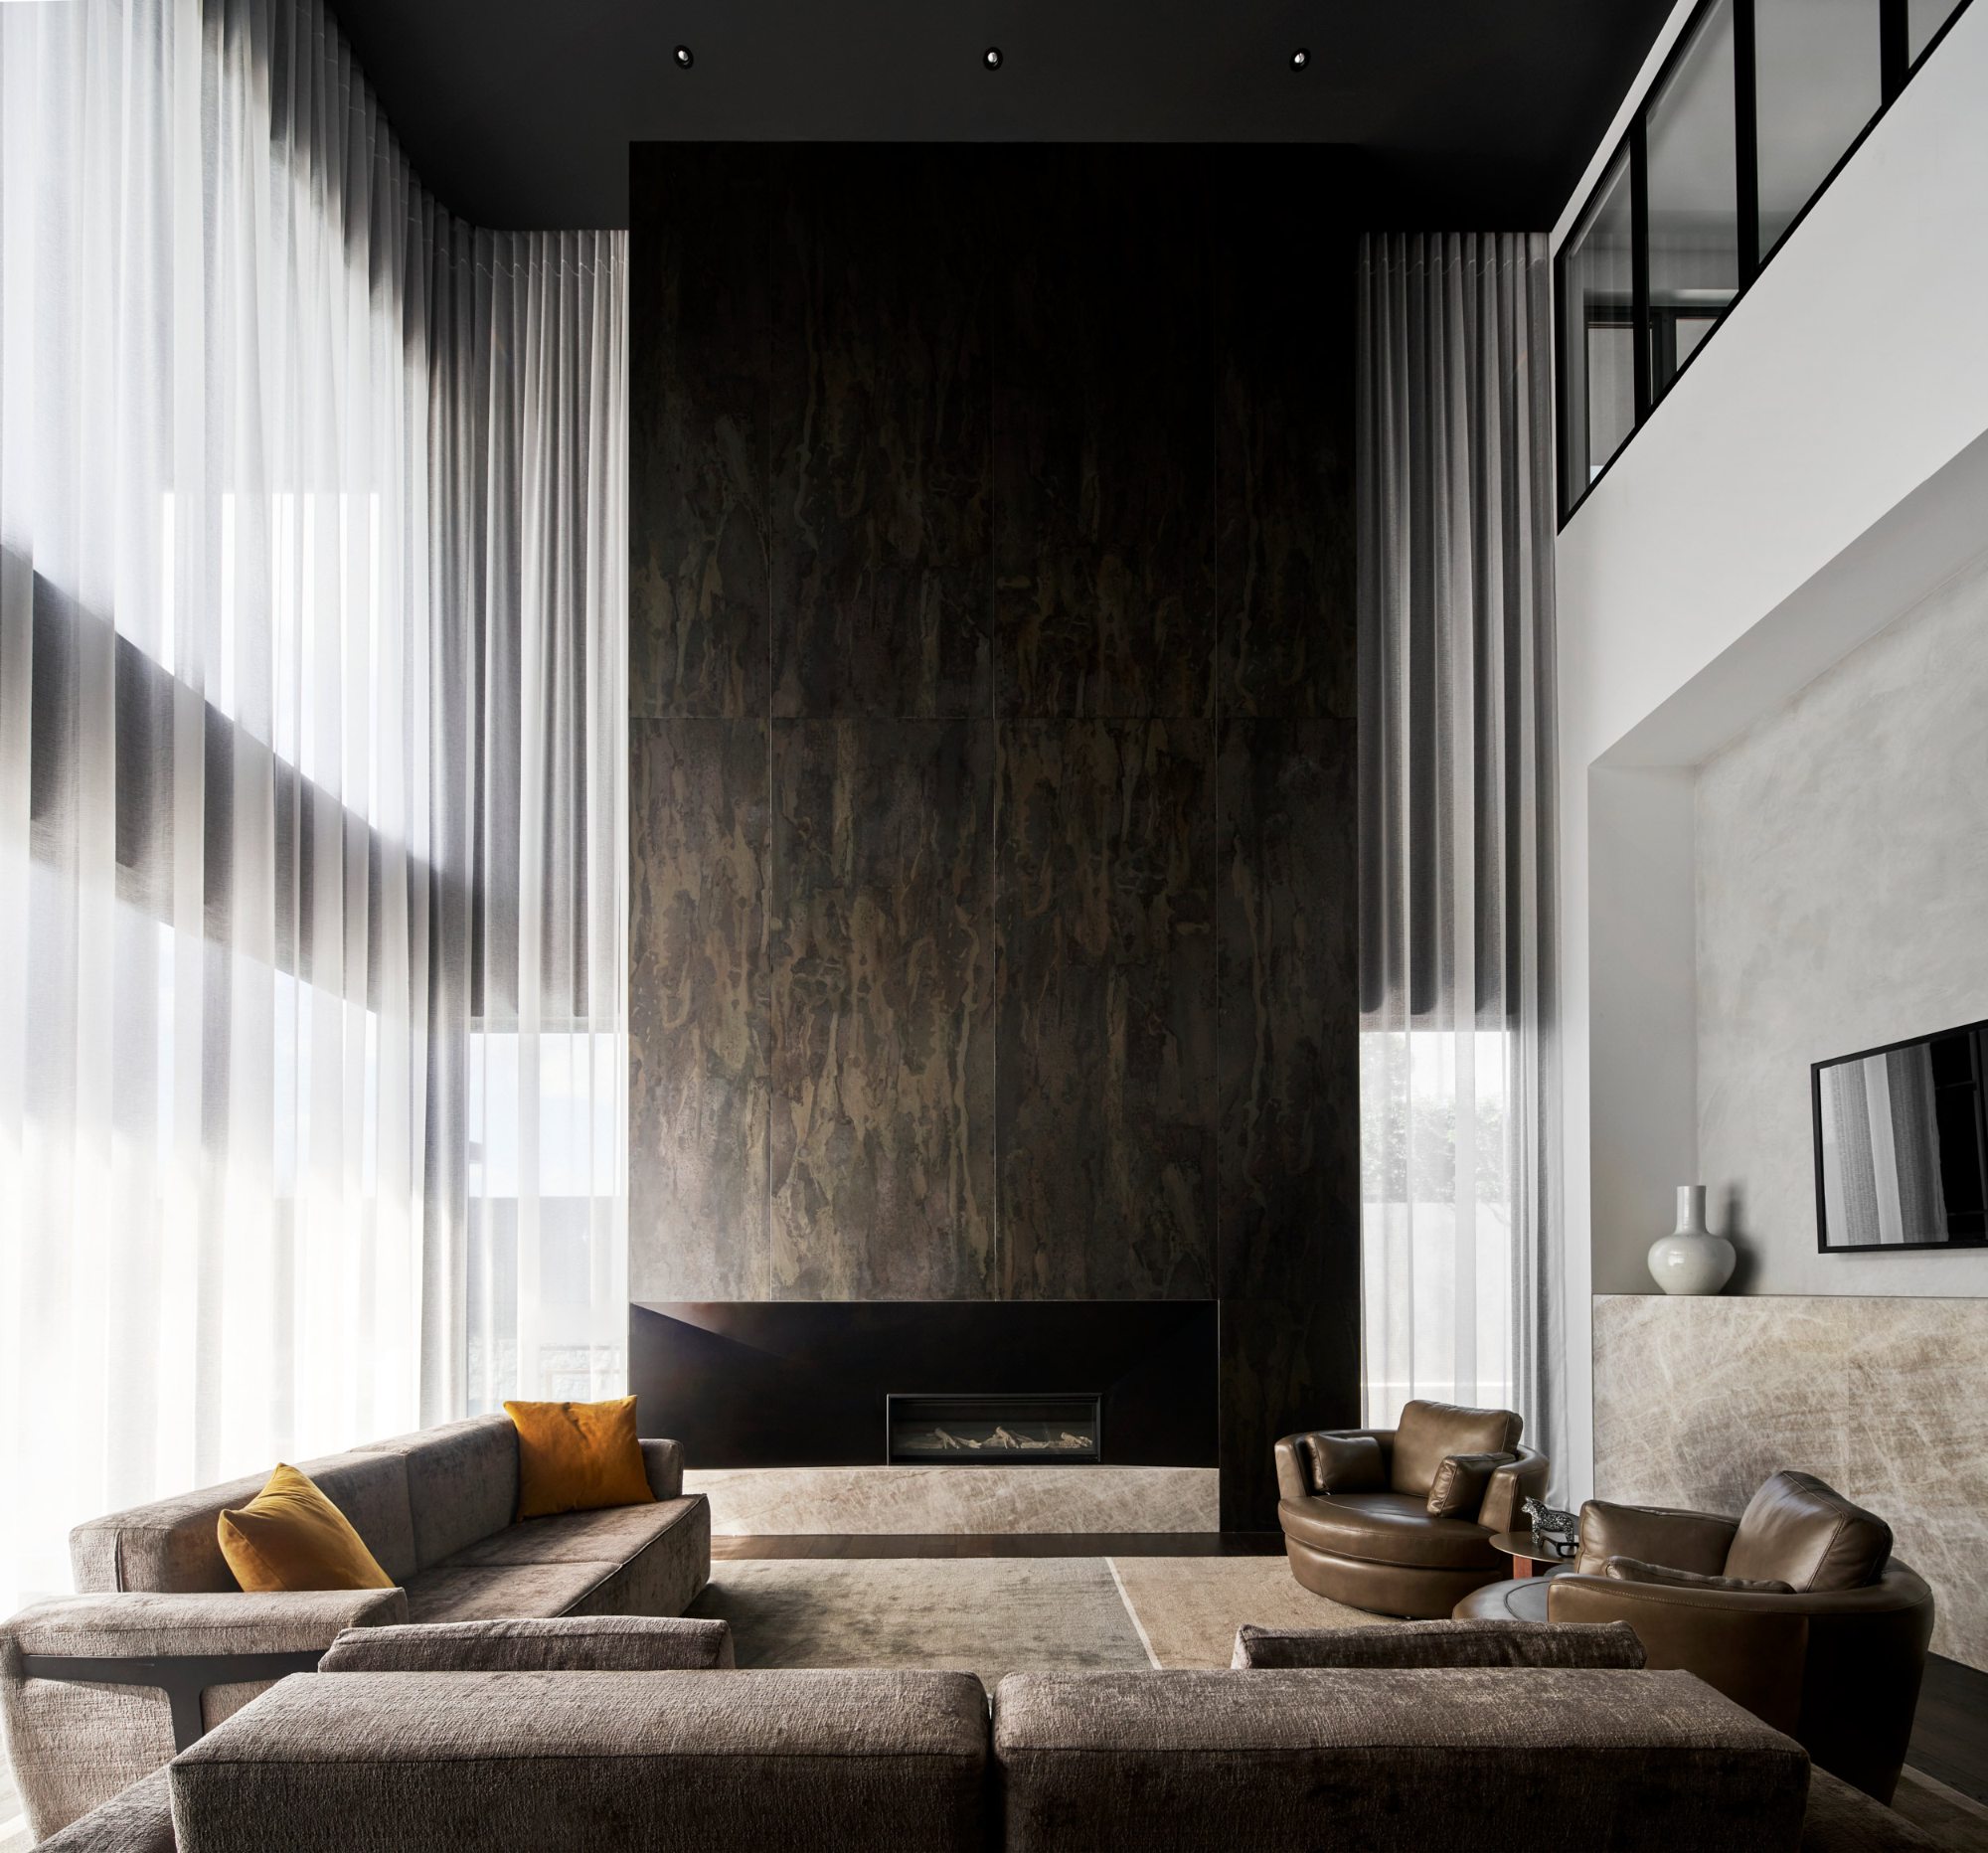 Image of Cosentino Whernside Avenue 3470 in An ode to luxury with Silestone - Cosentino